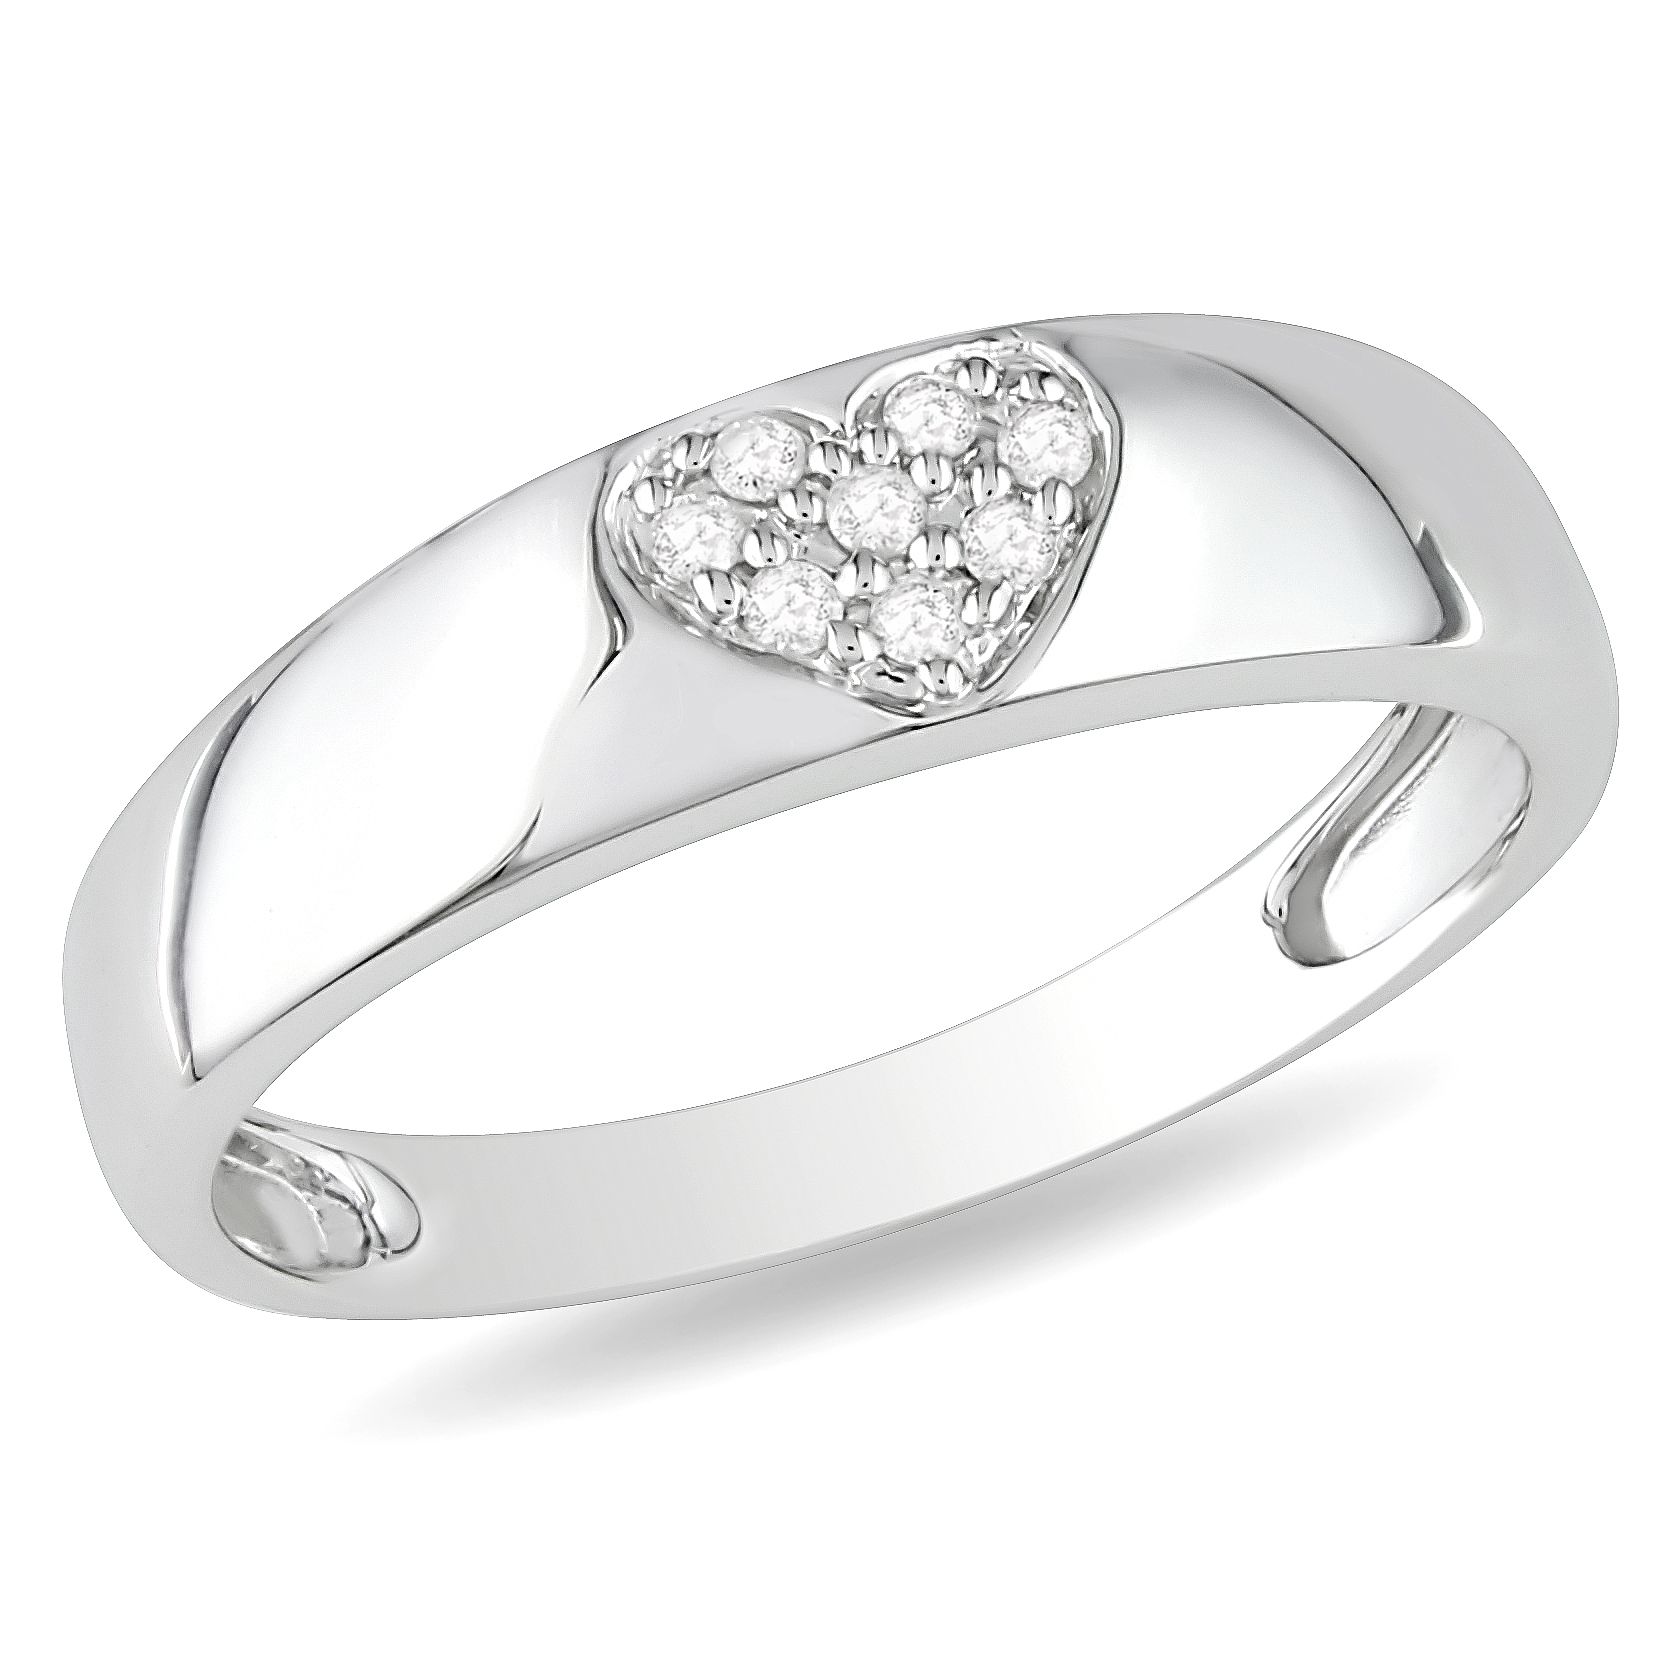 0.06 CTTW Diamond Fashion Ring Set in 10K White Gold (GH I2;I3)